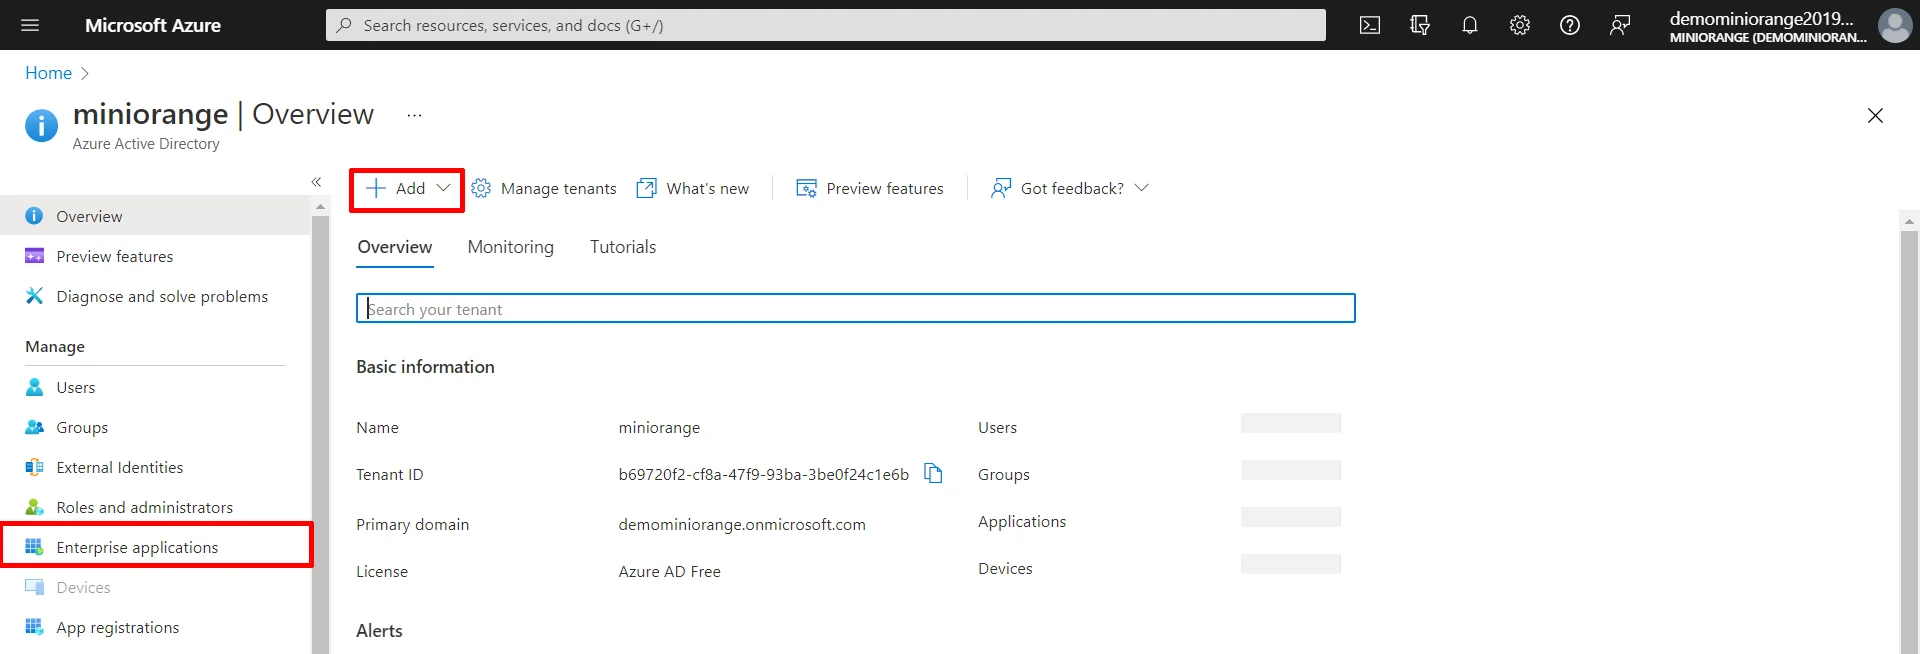 DNN SAML Single Sign-On (SSO) using Azure AD (Microsoft Entra ID) as IDP - non-gallery app